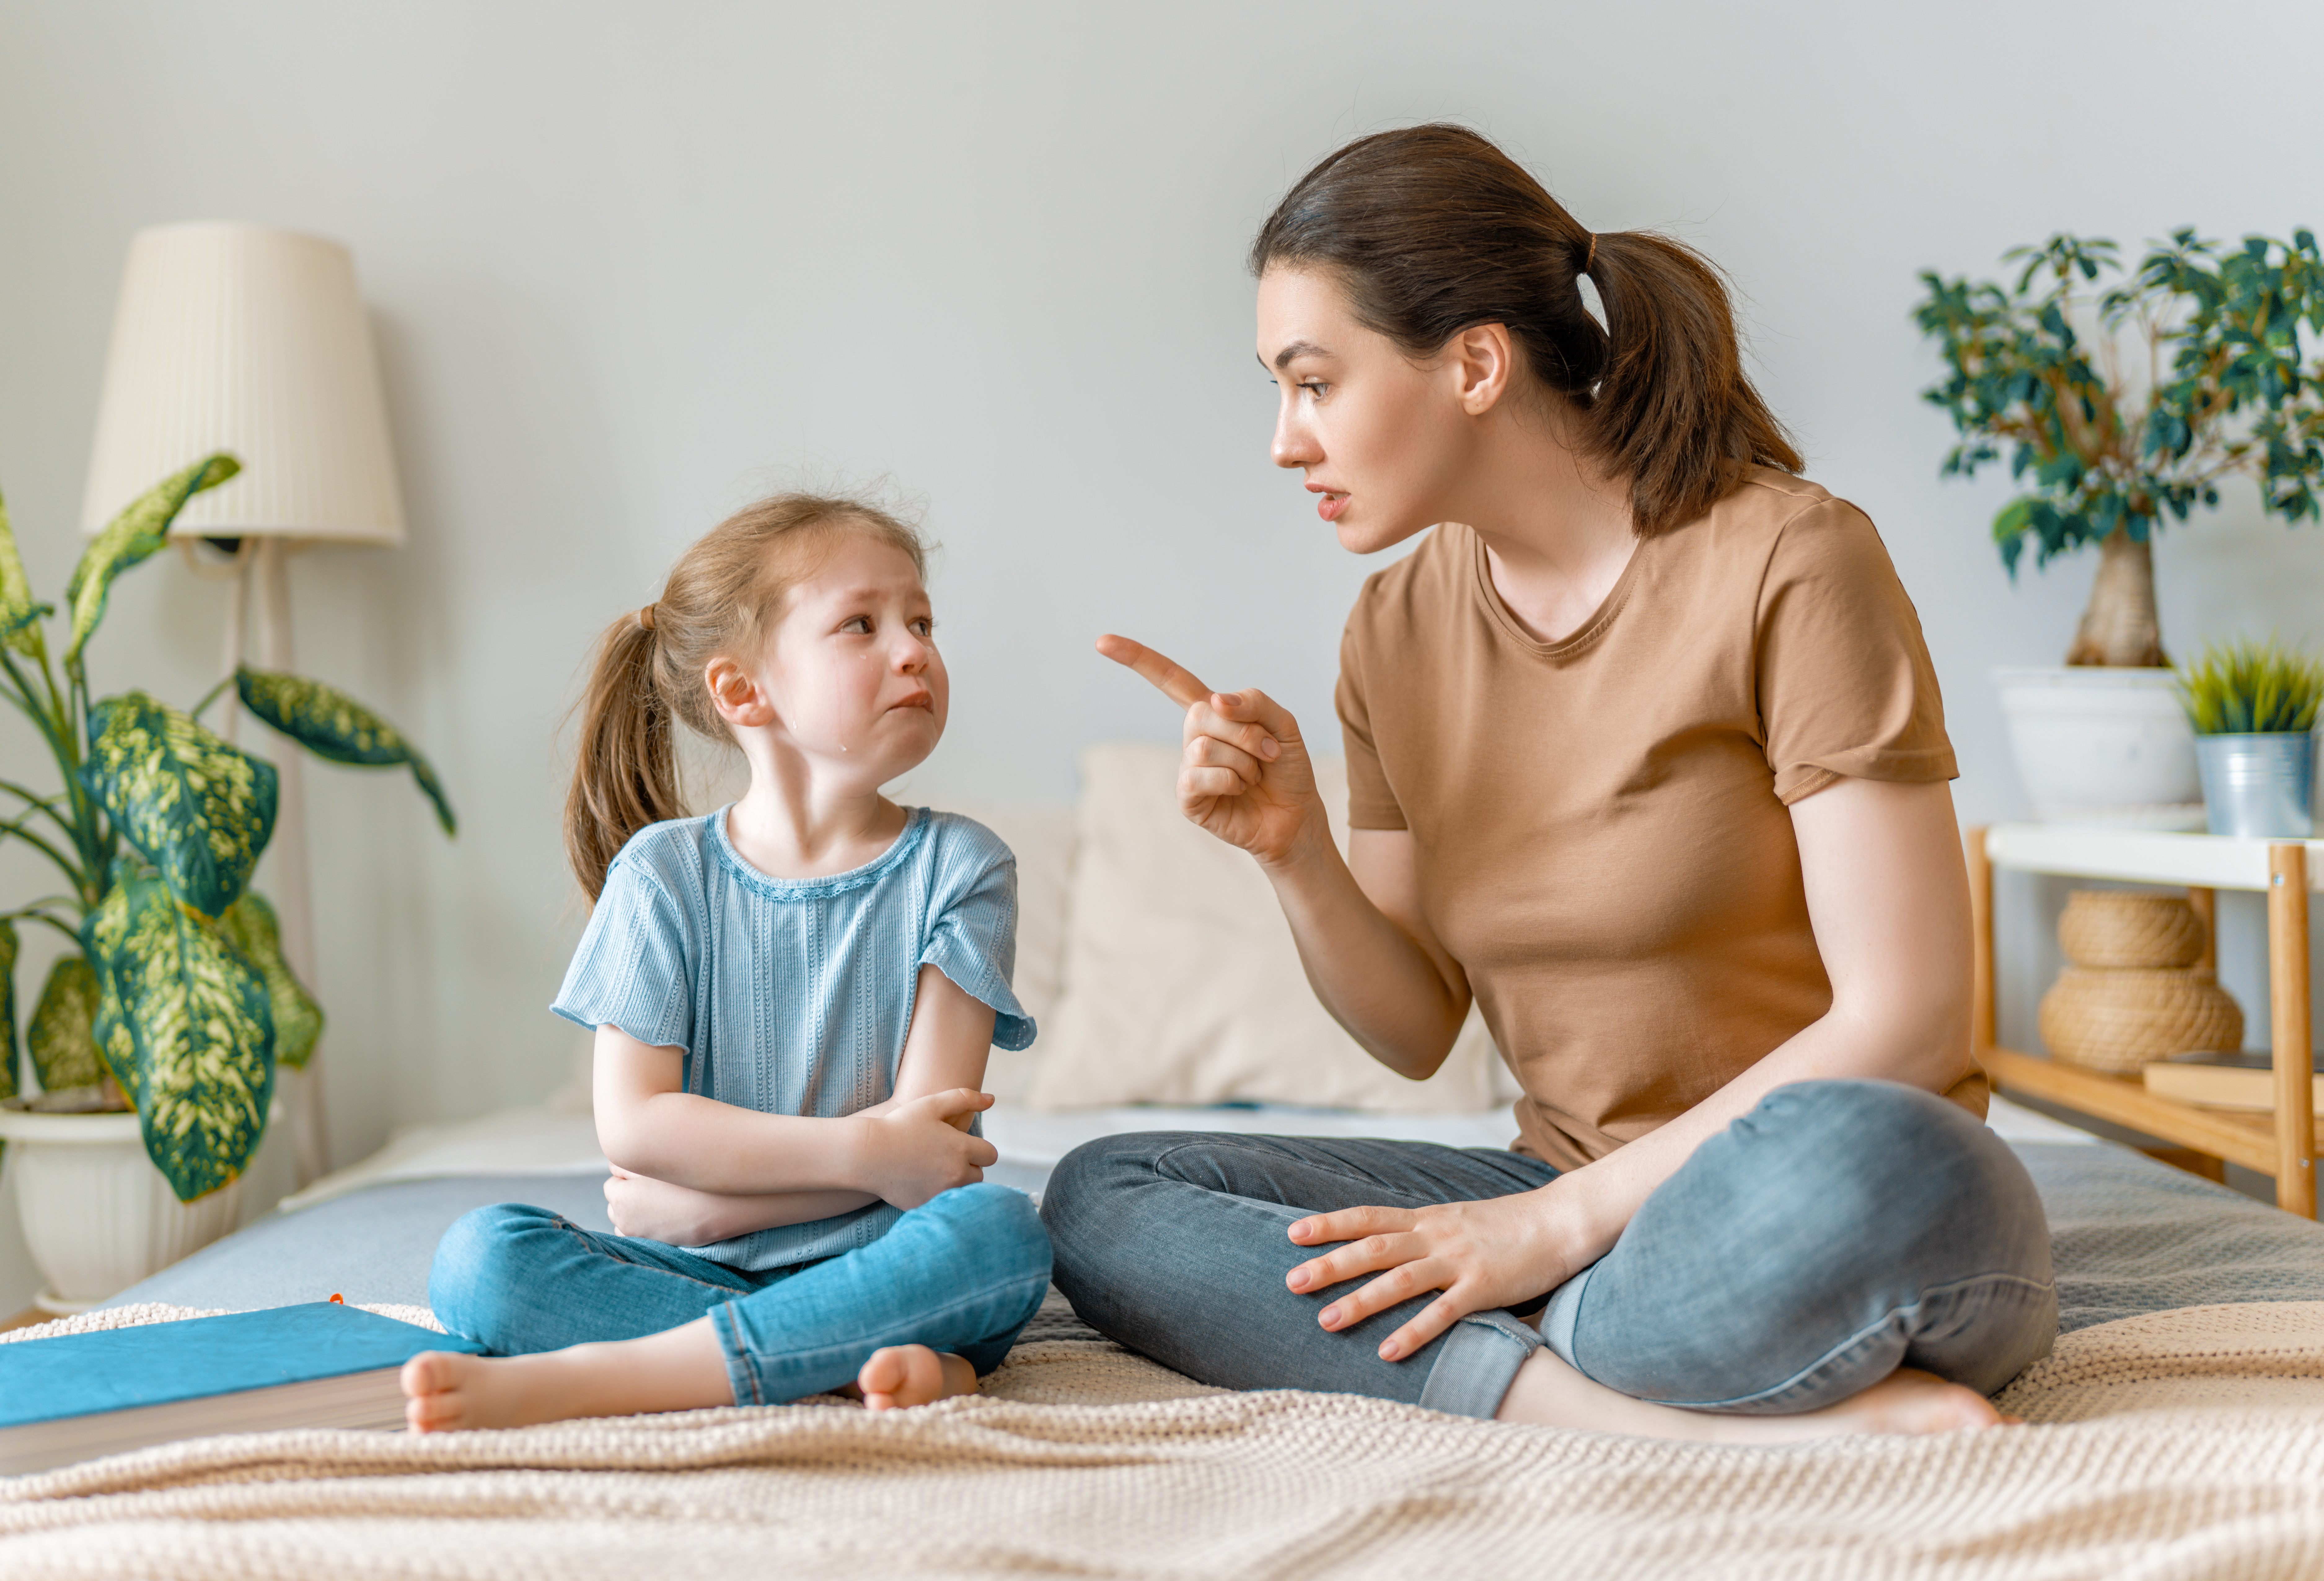 A mother disciplining her child | Source: Shutterstock